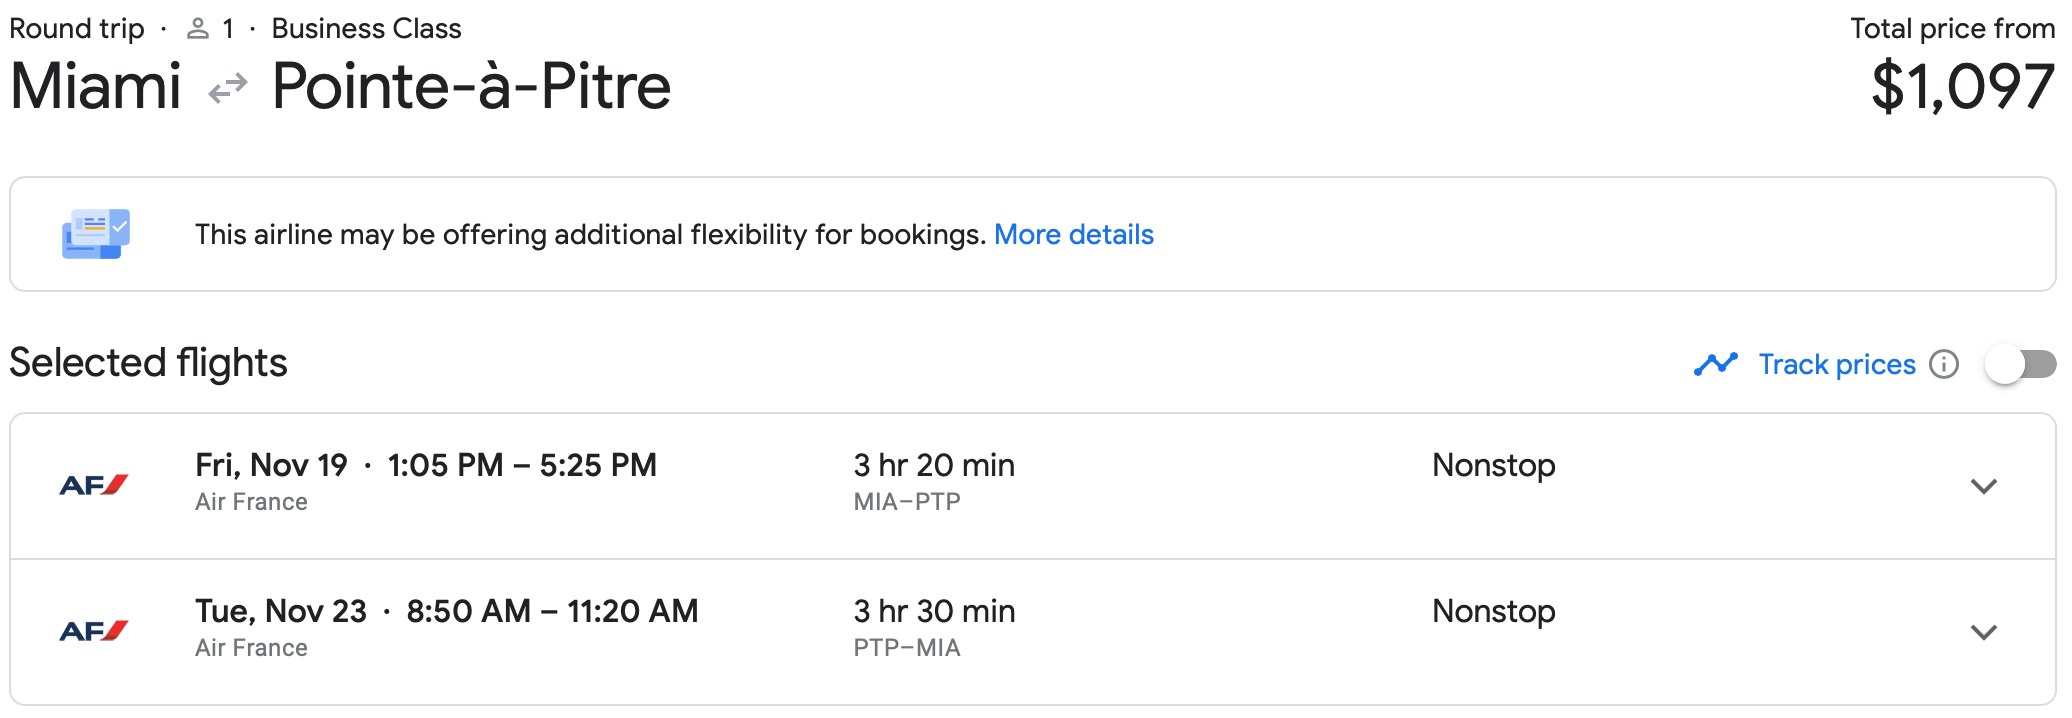 MIA to PTP Google Flights itinerary on Air France